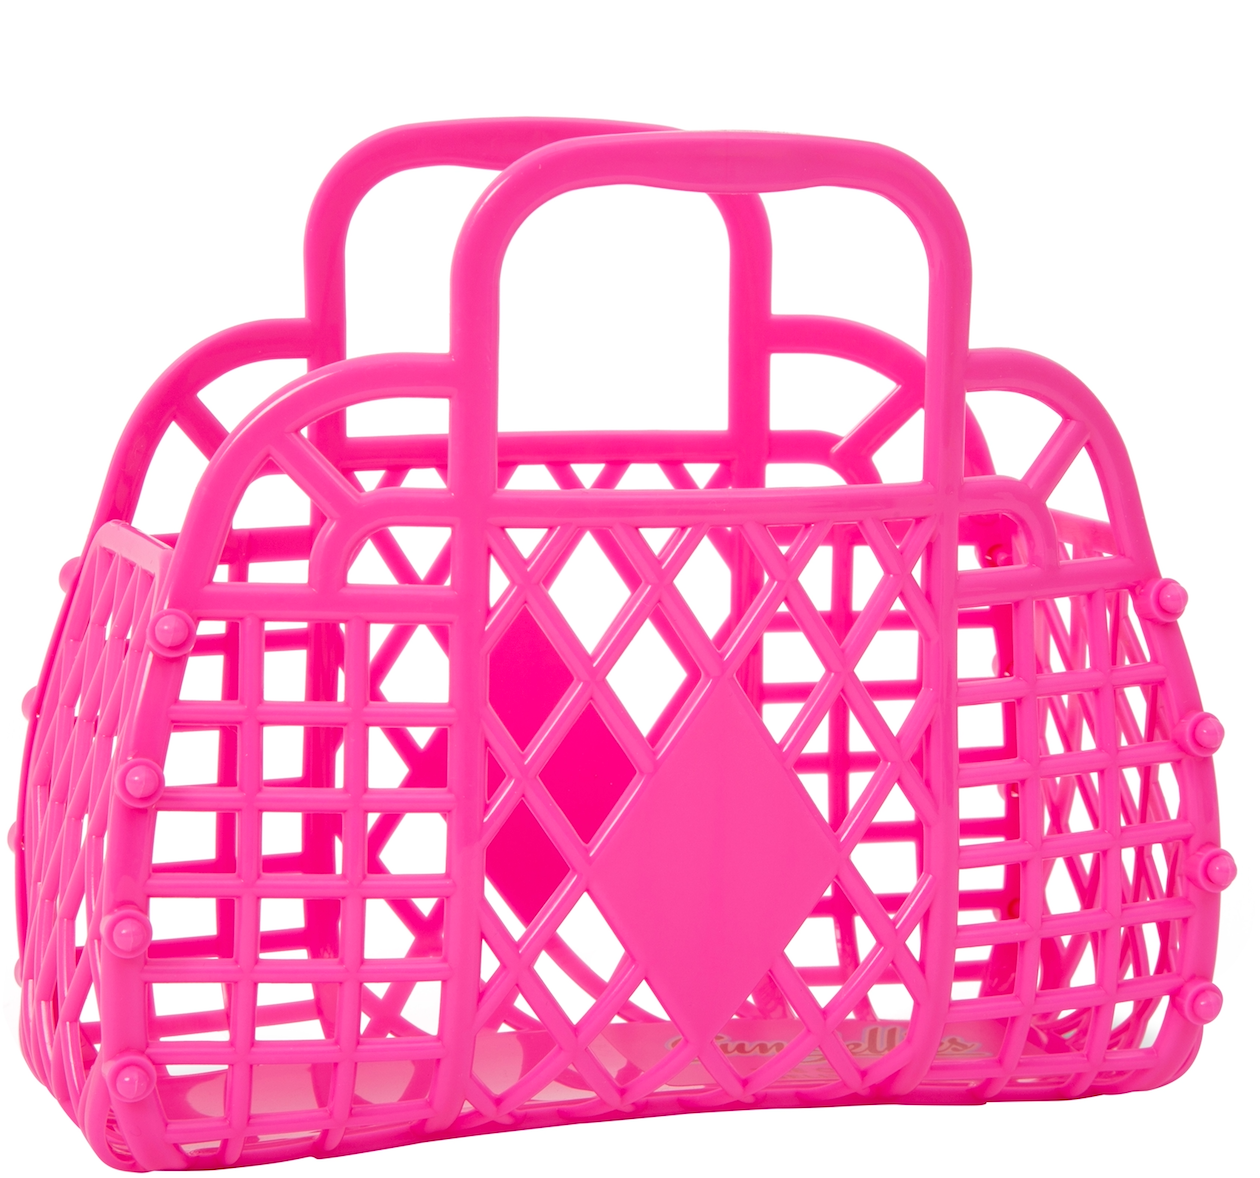 Retro Basket in Berry Pink - Mini